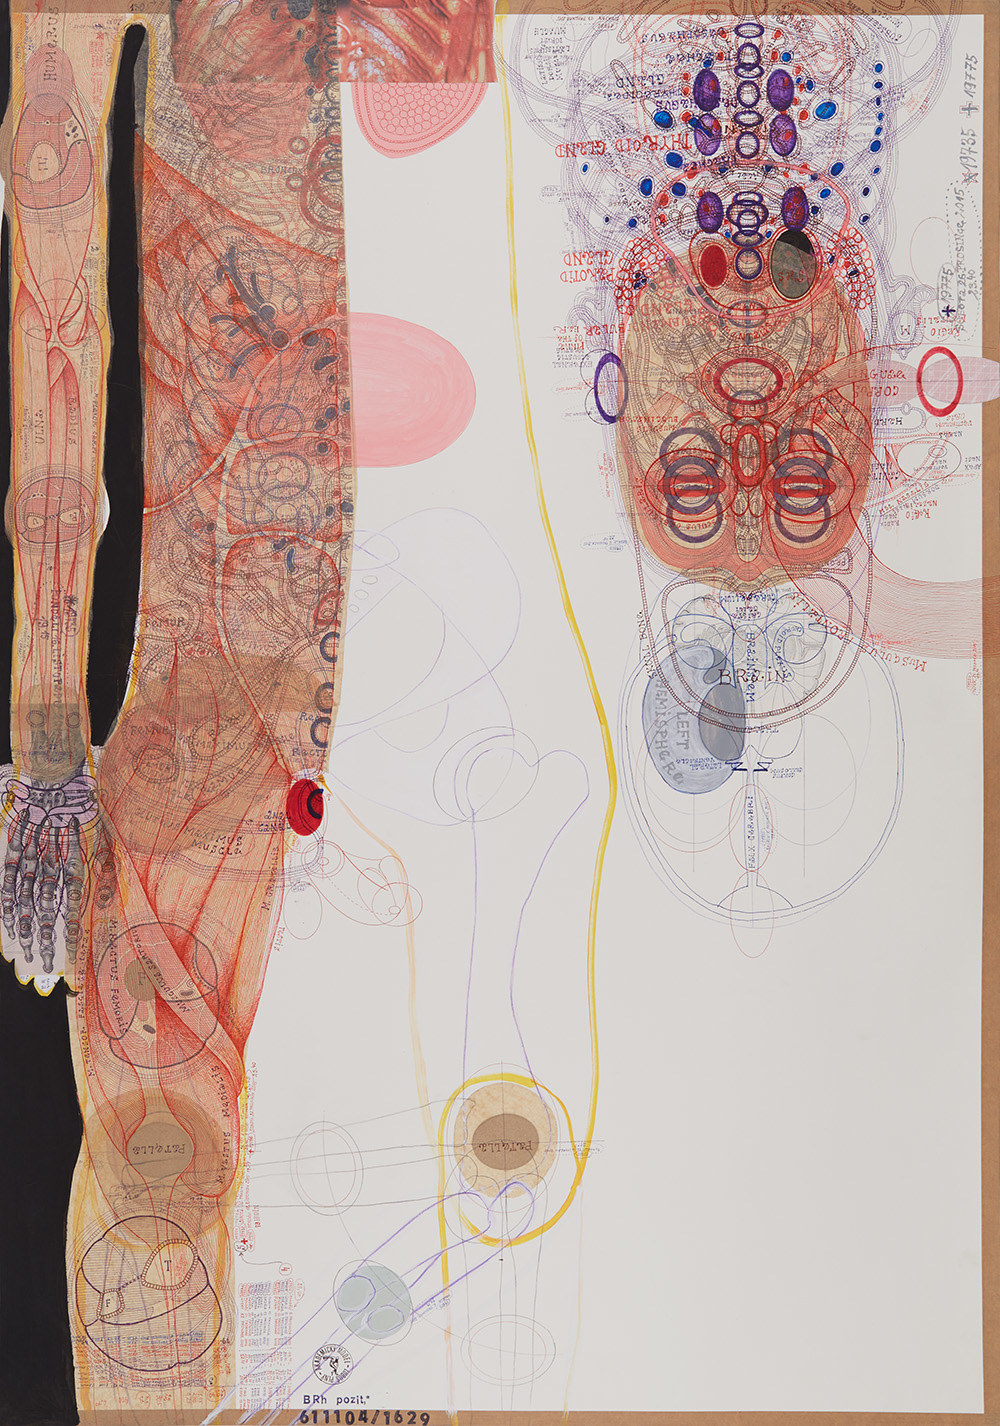 Lubo&scaron; Plný&nbsp;(1961) Czech Republic, Brain, 2016, Ink, acrylic, collage on paper, 39.37&nbsp;x 27.56 in